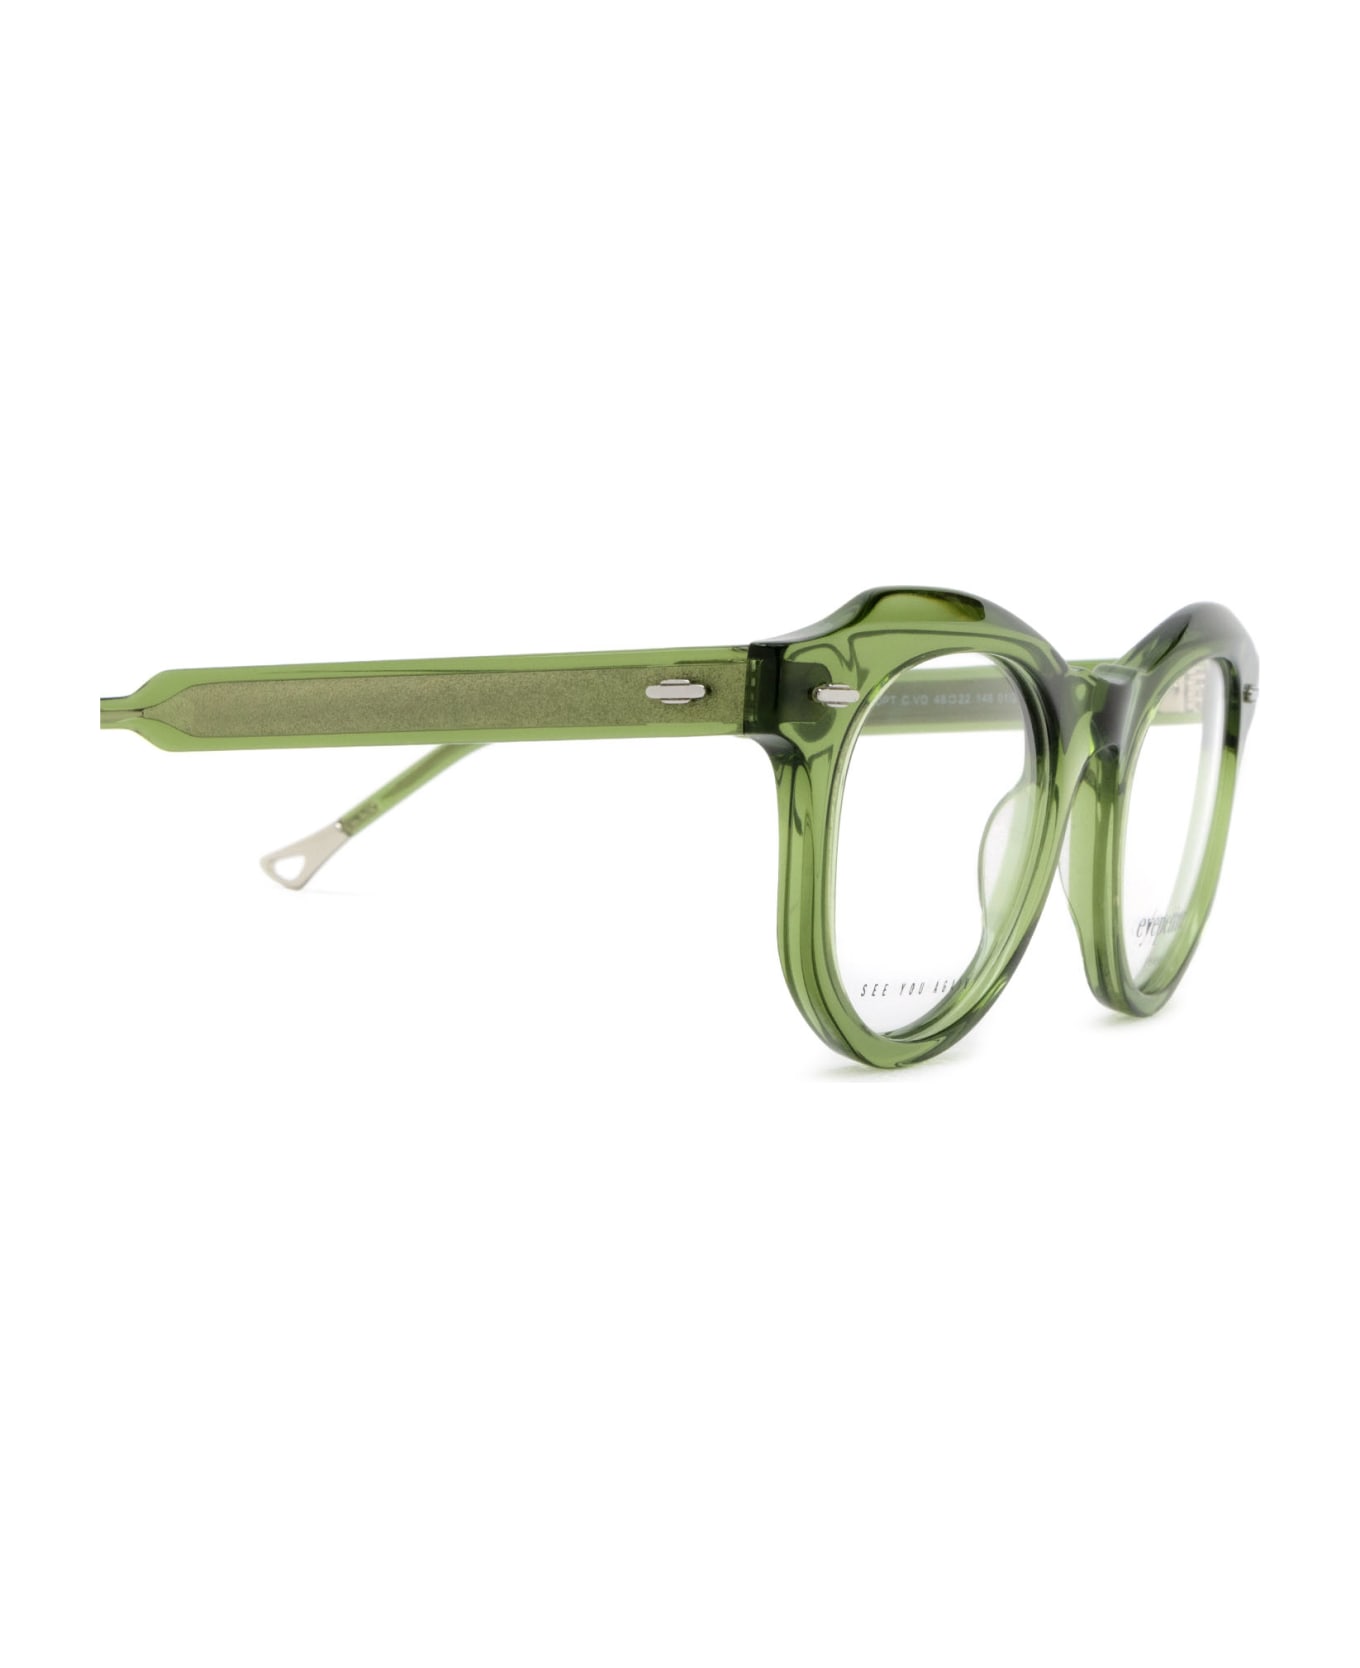 Eyepetizer Magali Opt Transparent Green Glasses - Transparent Green